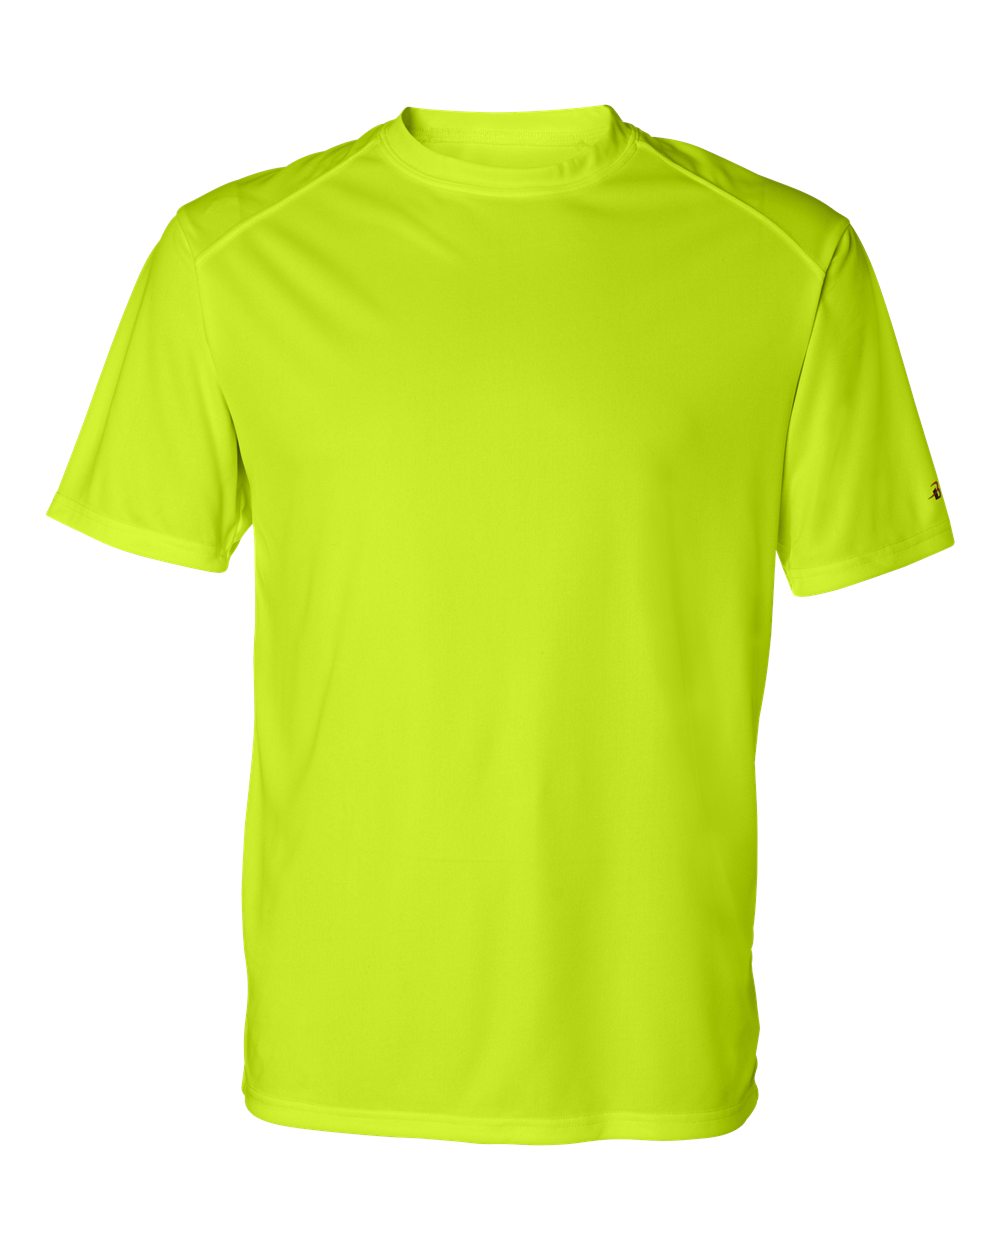 Badger Sport Adult Unisex Short Sleeve Camo Tee Shirt - Lime Green